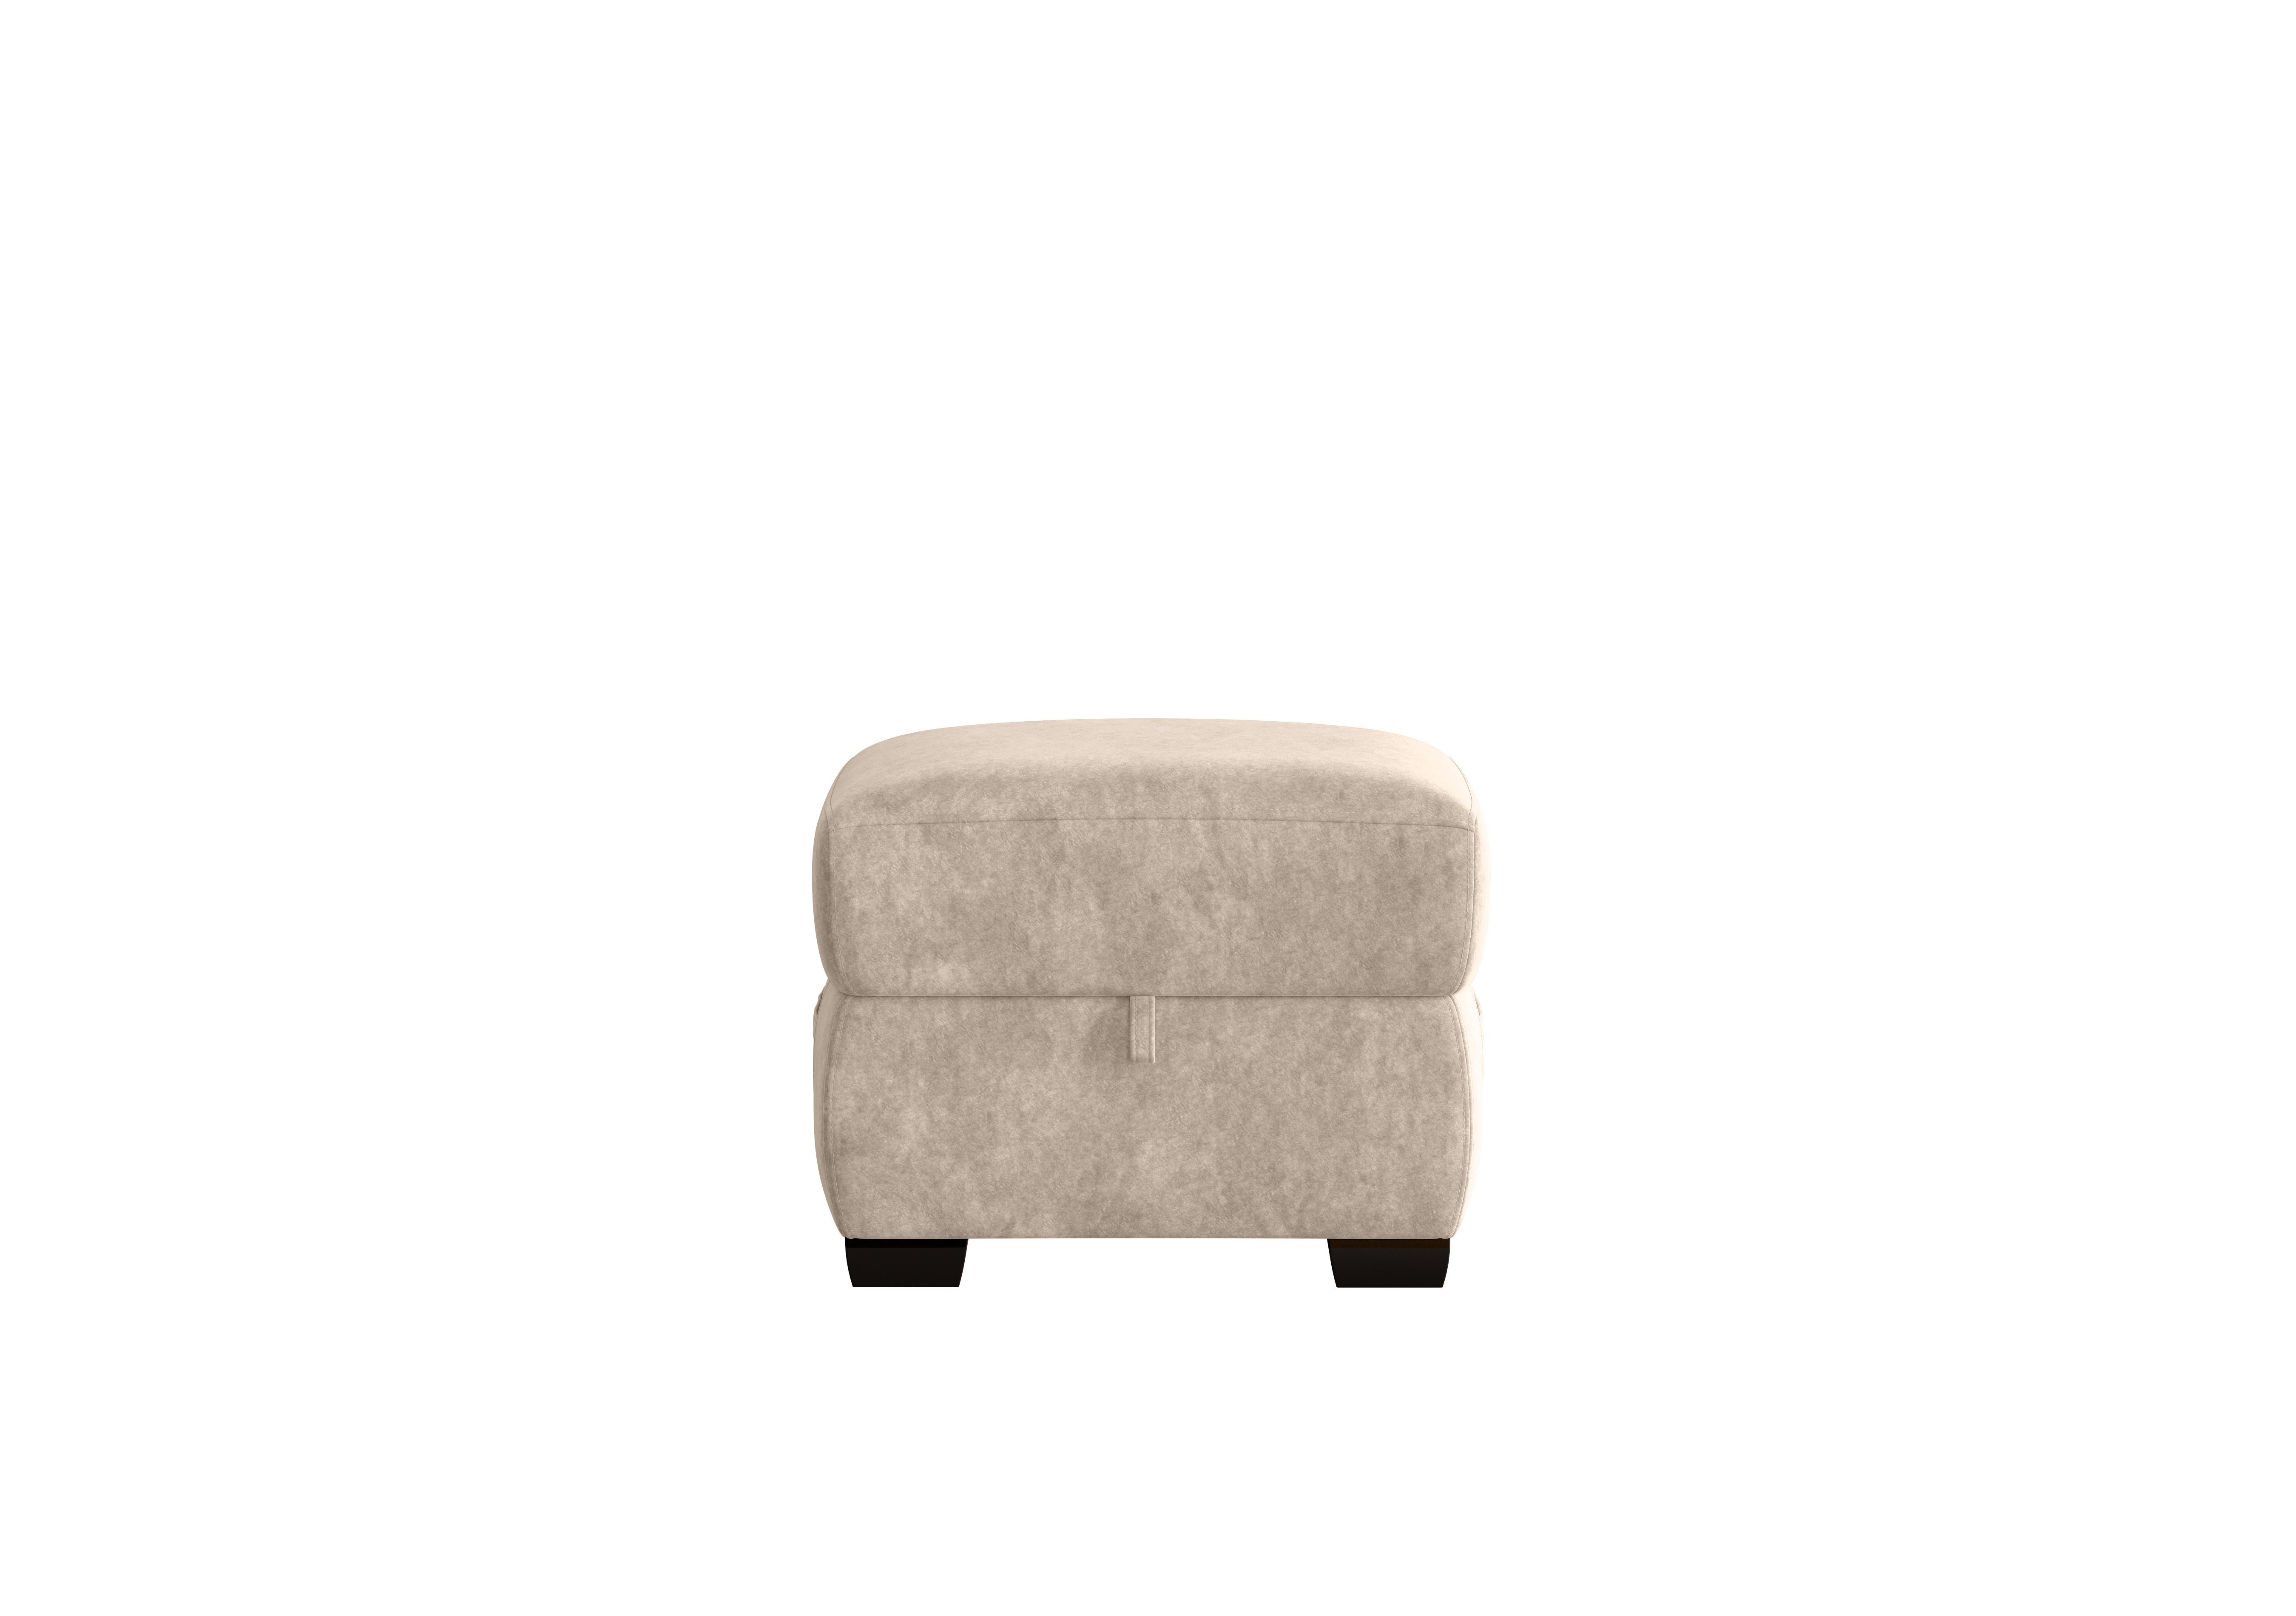 Starlight Express Fabric Storage Footstool in Bfa-Bnn-R26 Fv2 Cream on Furniture Village